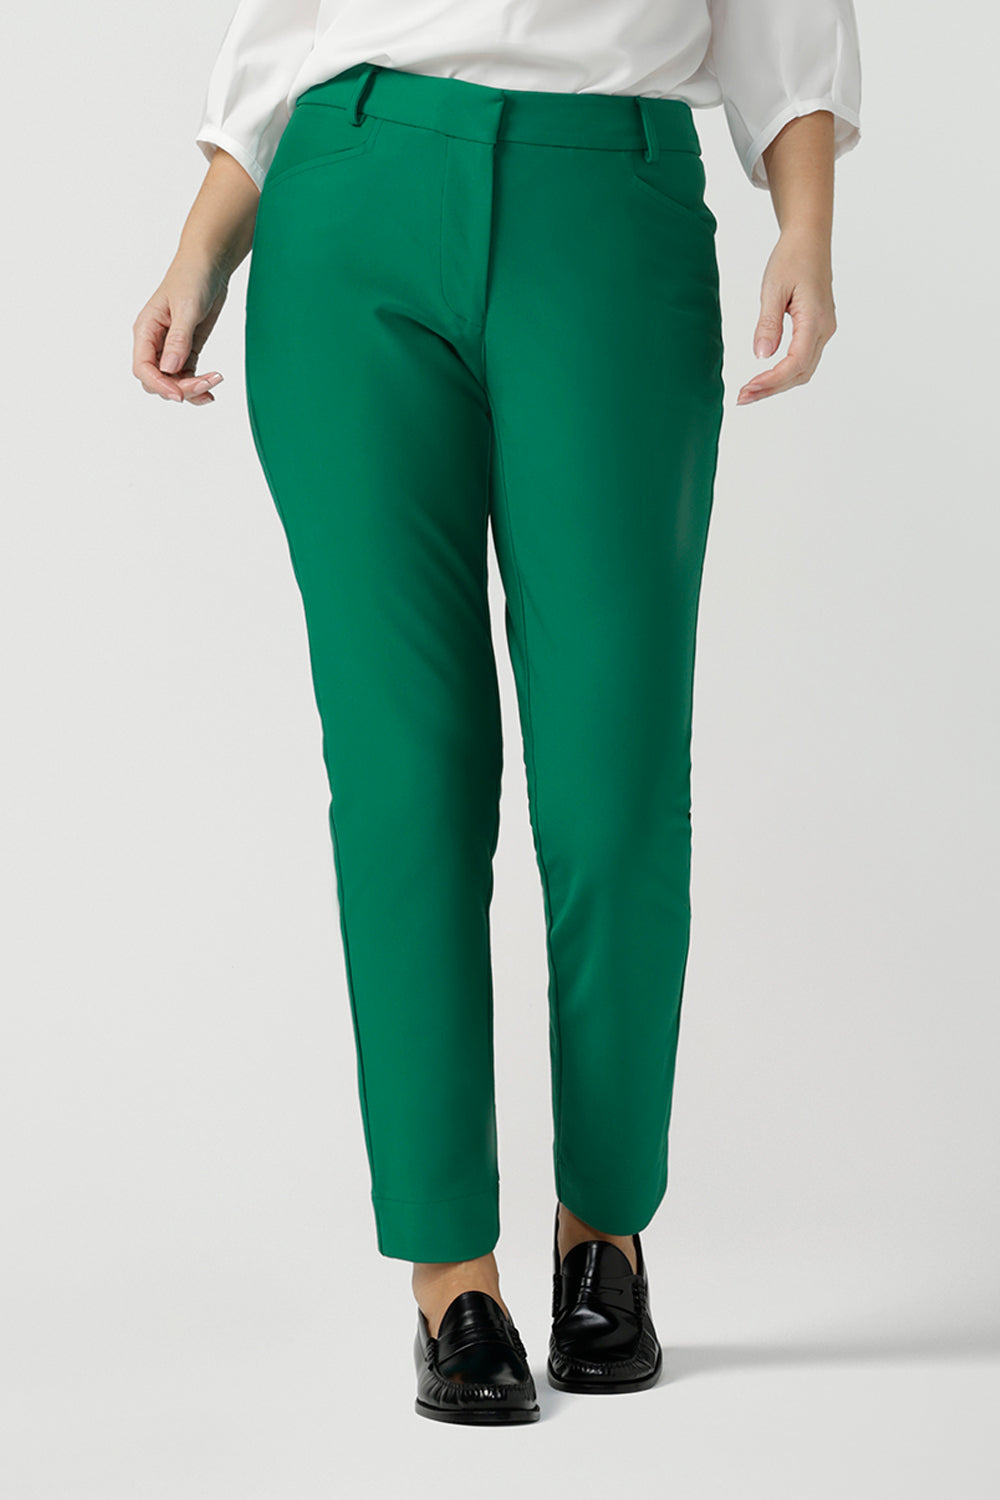 Lulu Tailored Pant in Emerald | Leina & Fleur | Easy Care Work Pants ...